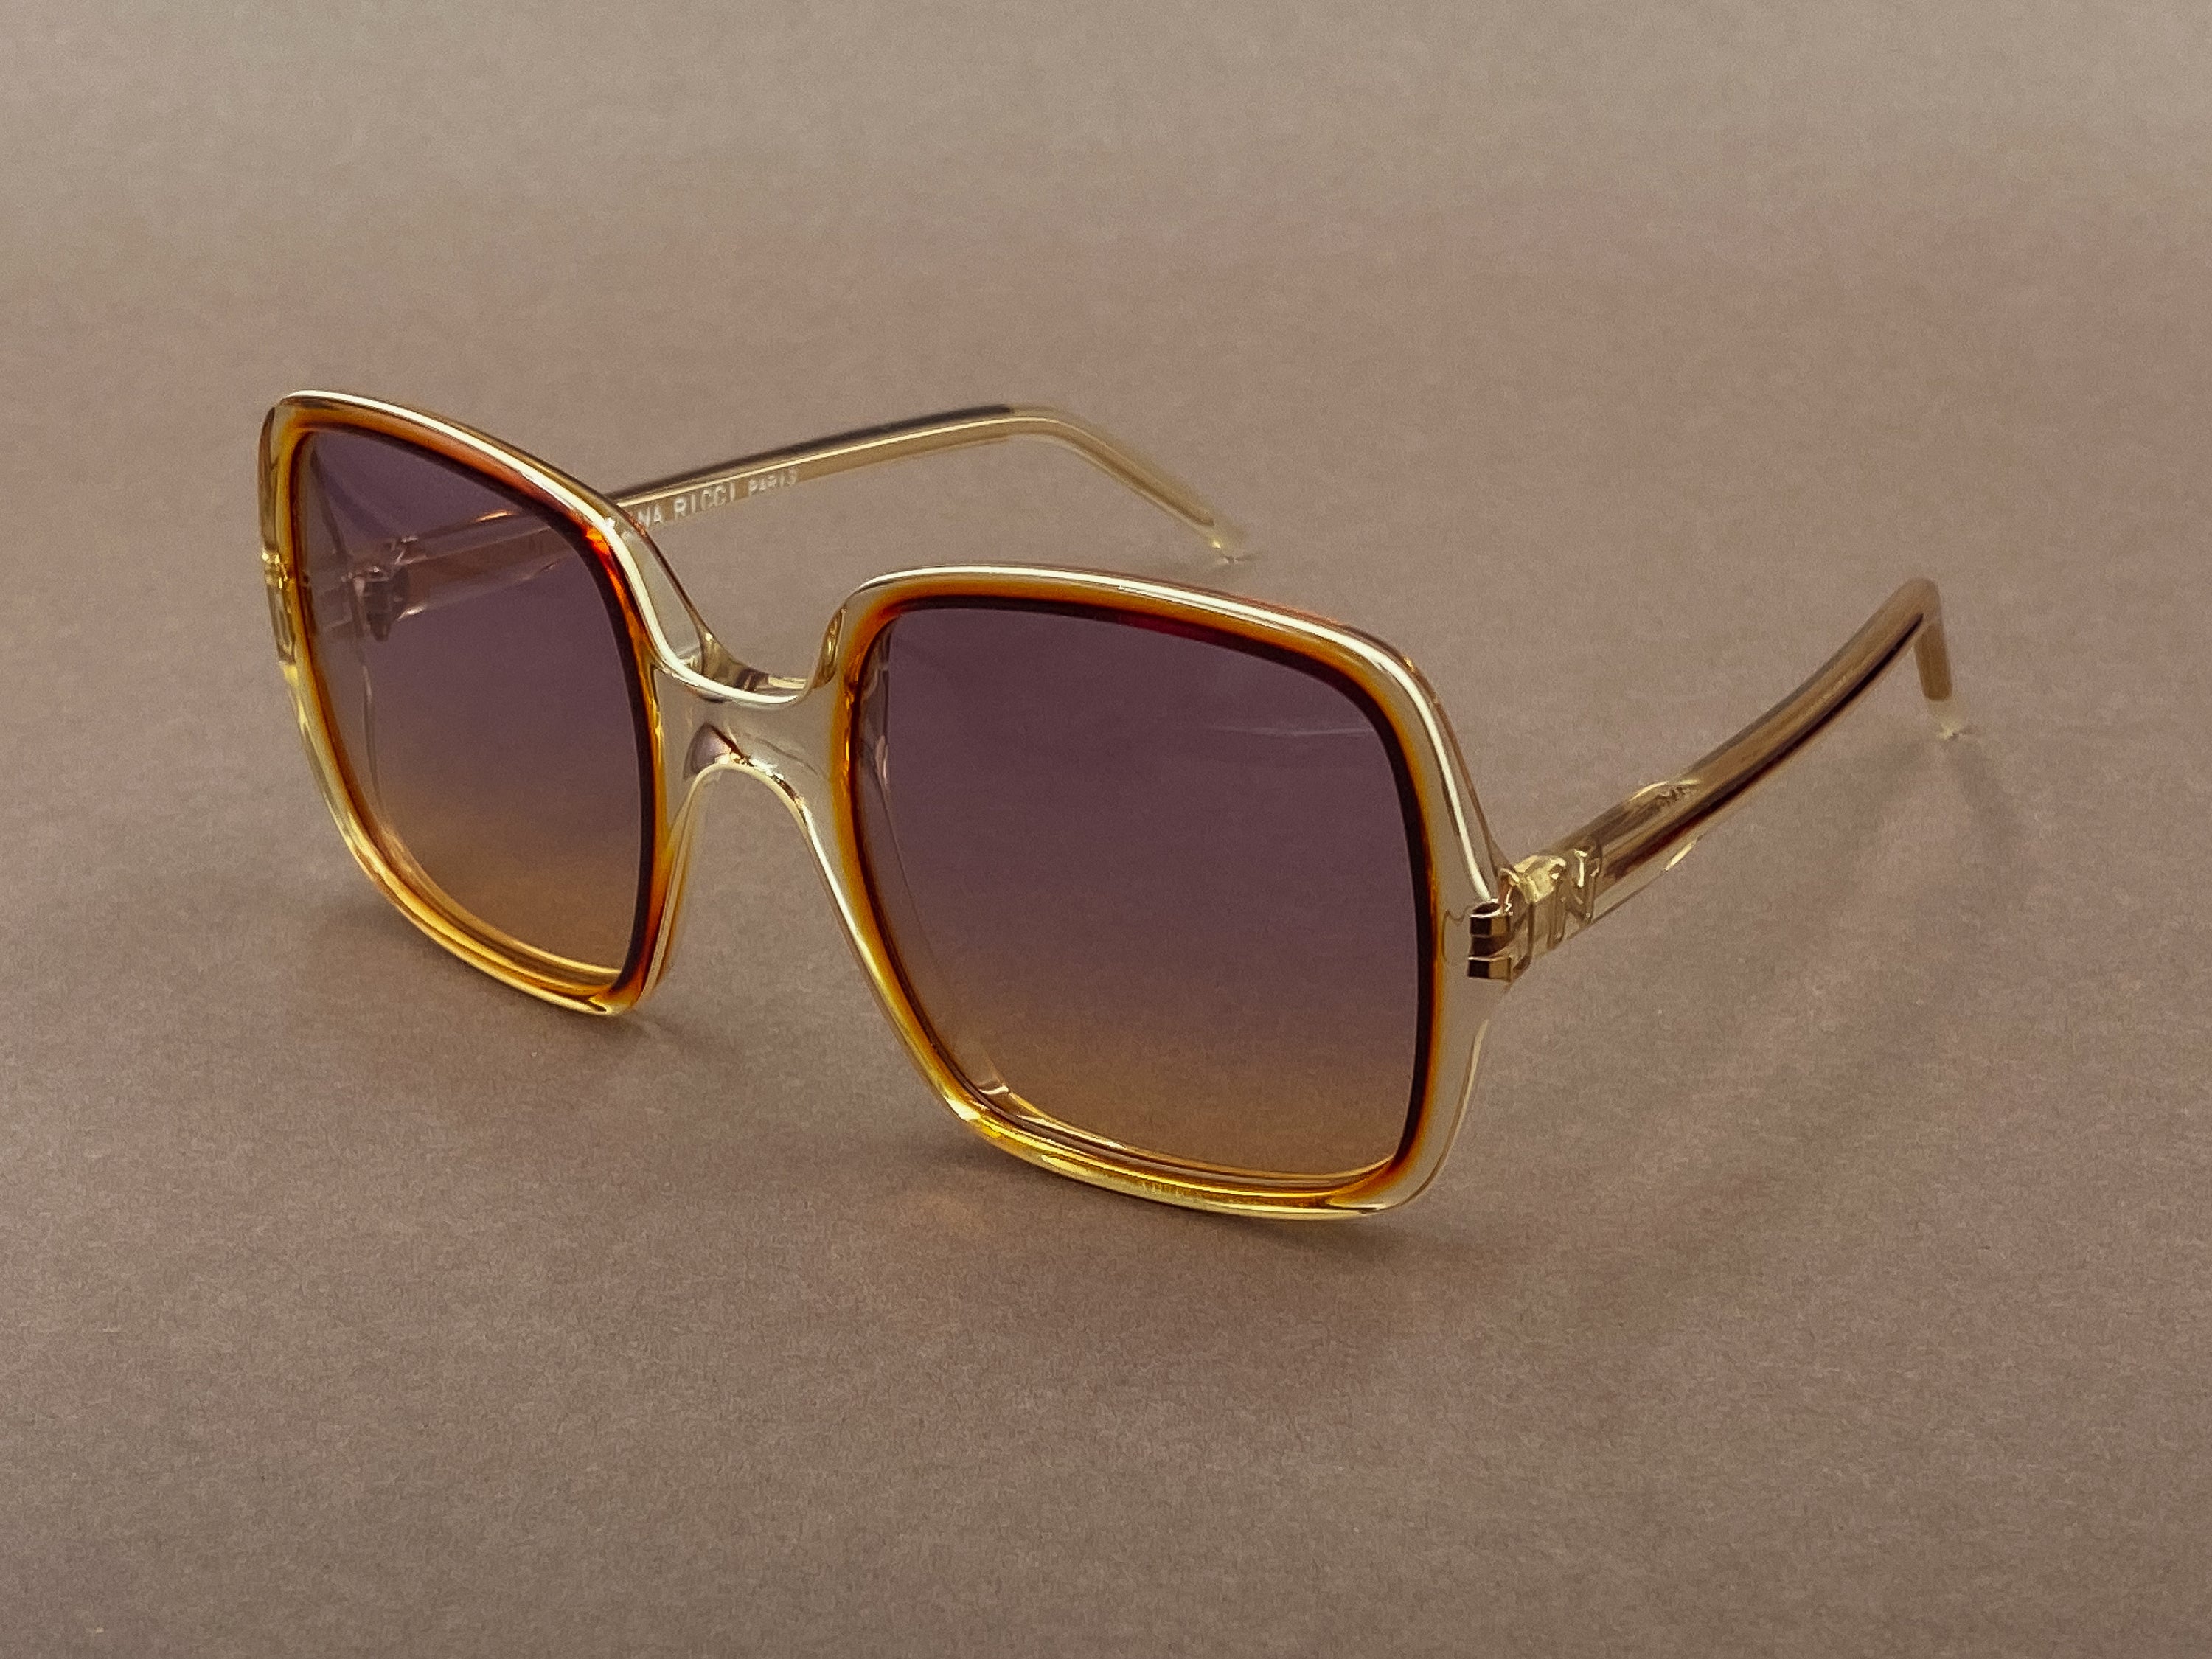 Nina Ricci 144-FIC ladies sunglasses